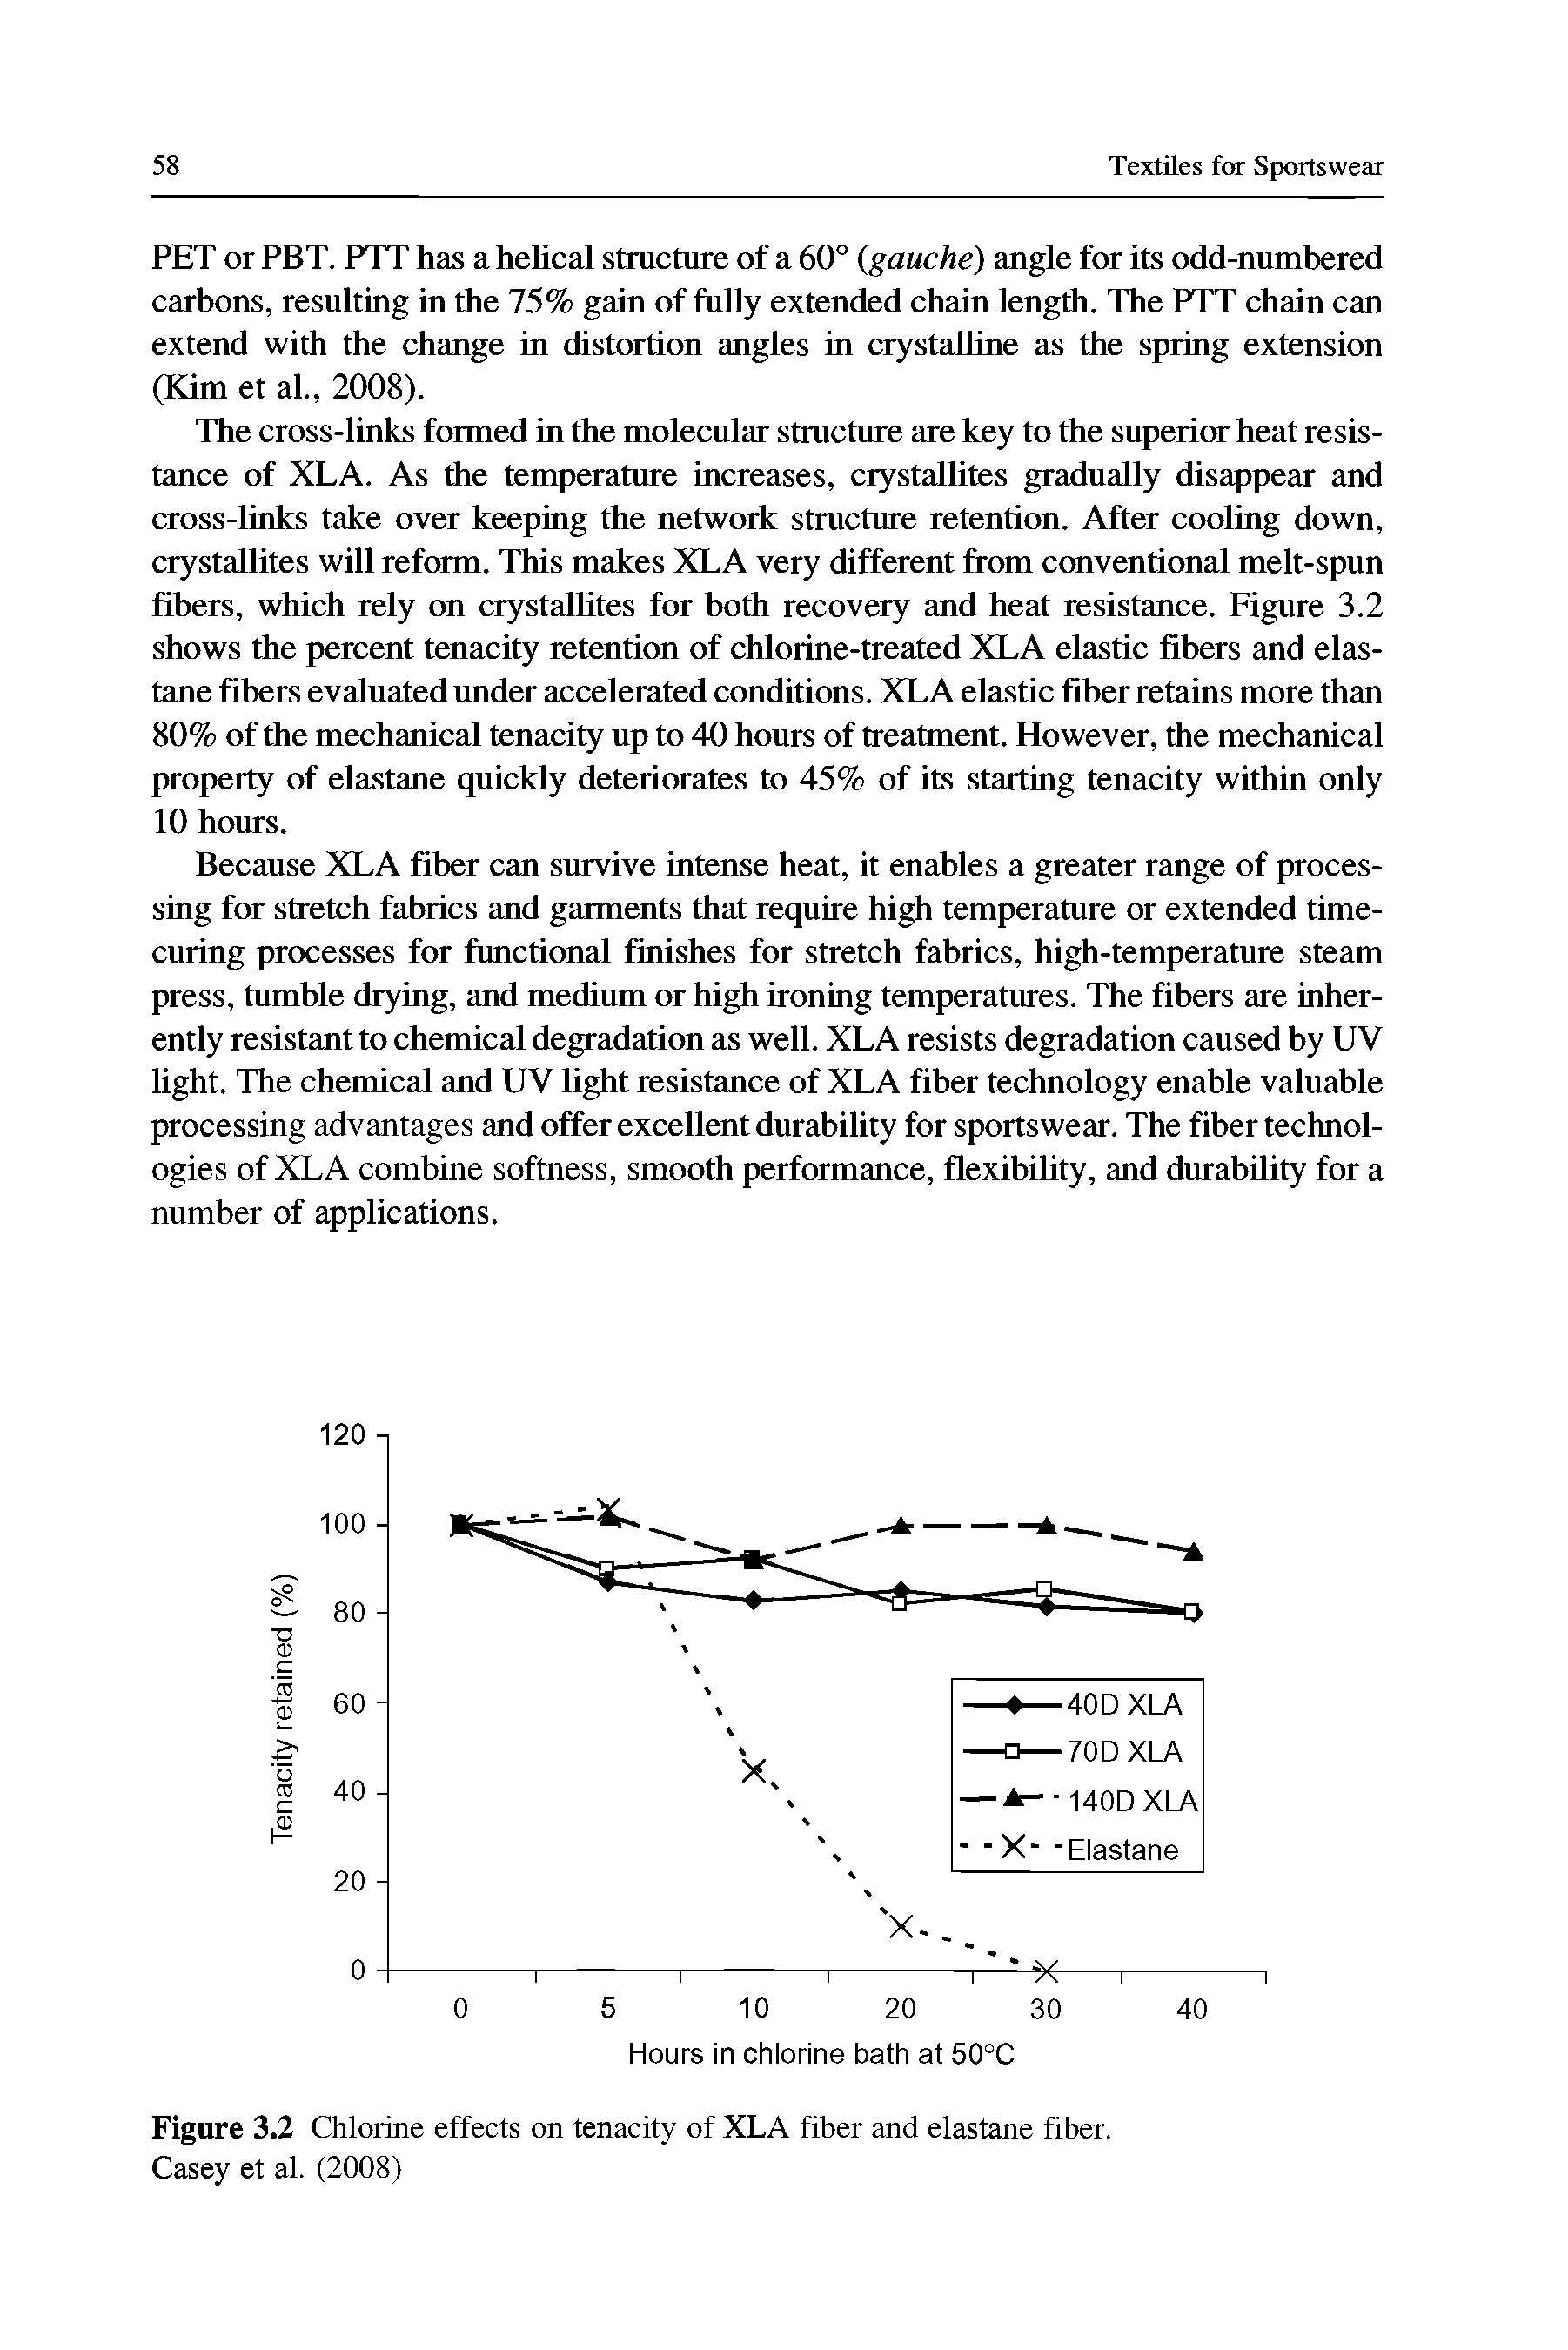 Figure 3.2 Chlorine effects on tenacity of XLA fiber and elastane fiber. Casey et al. (2008)...